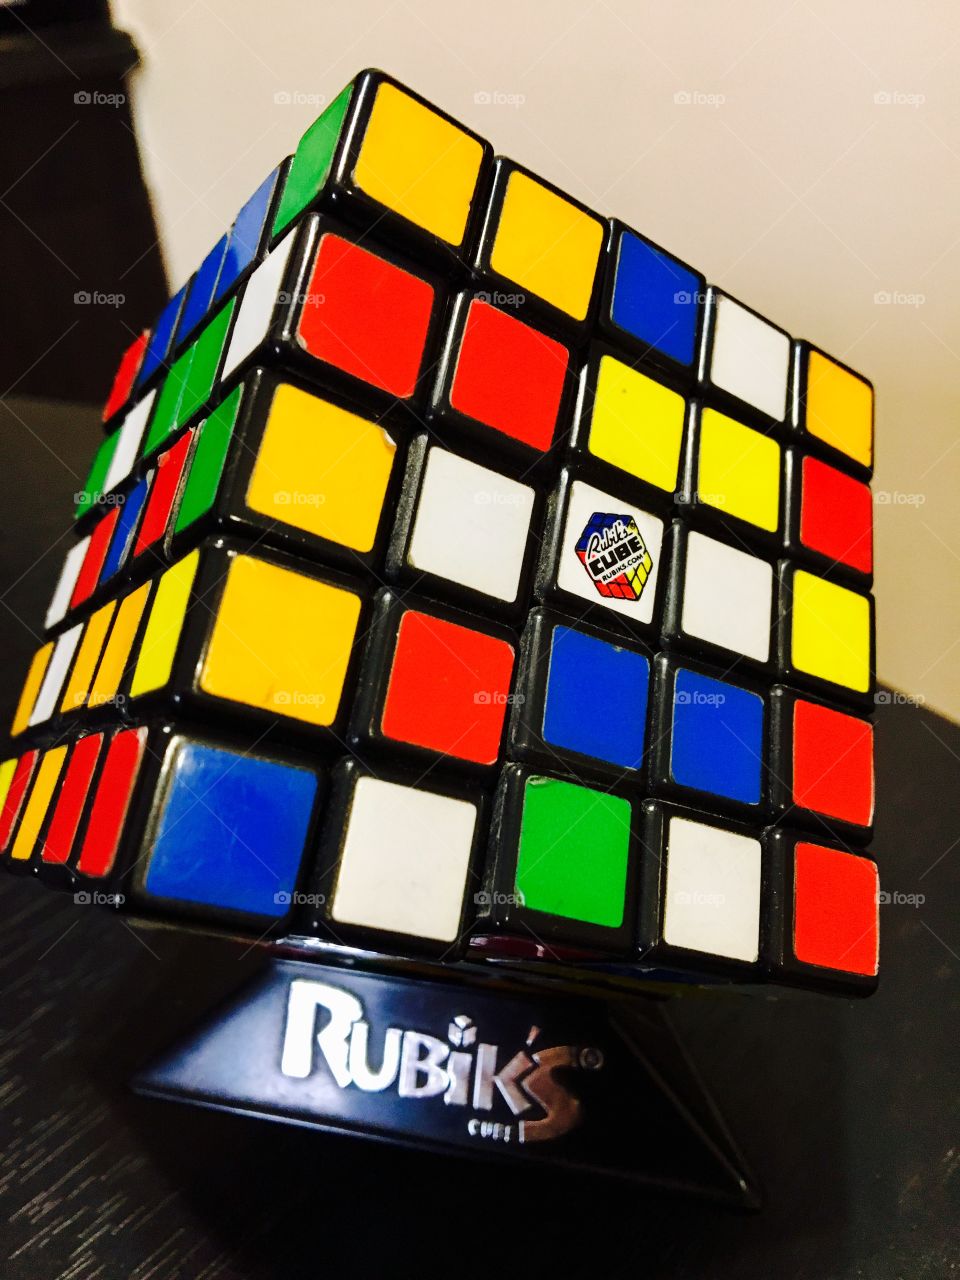 Rubiks!